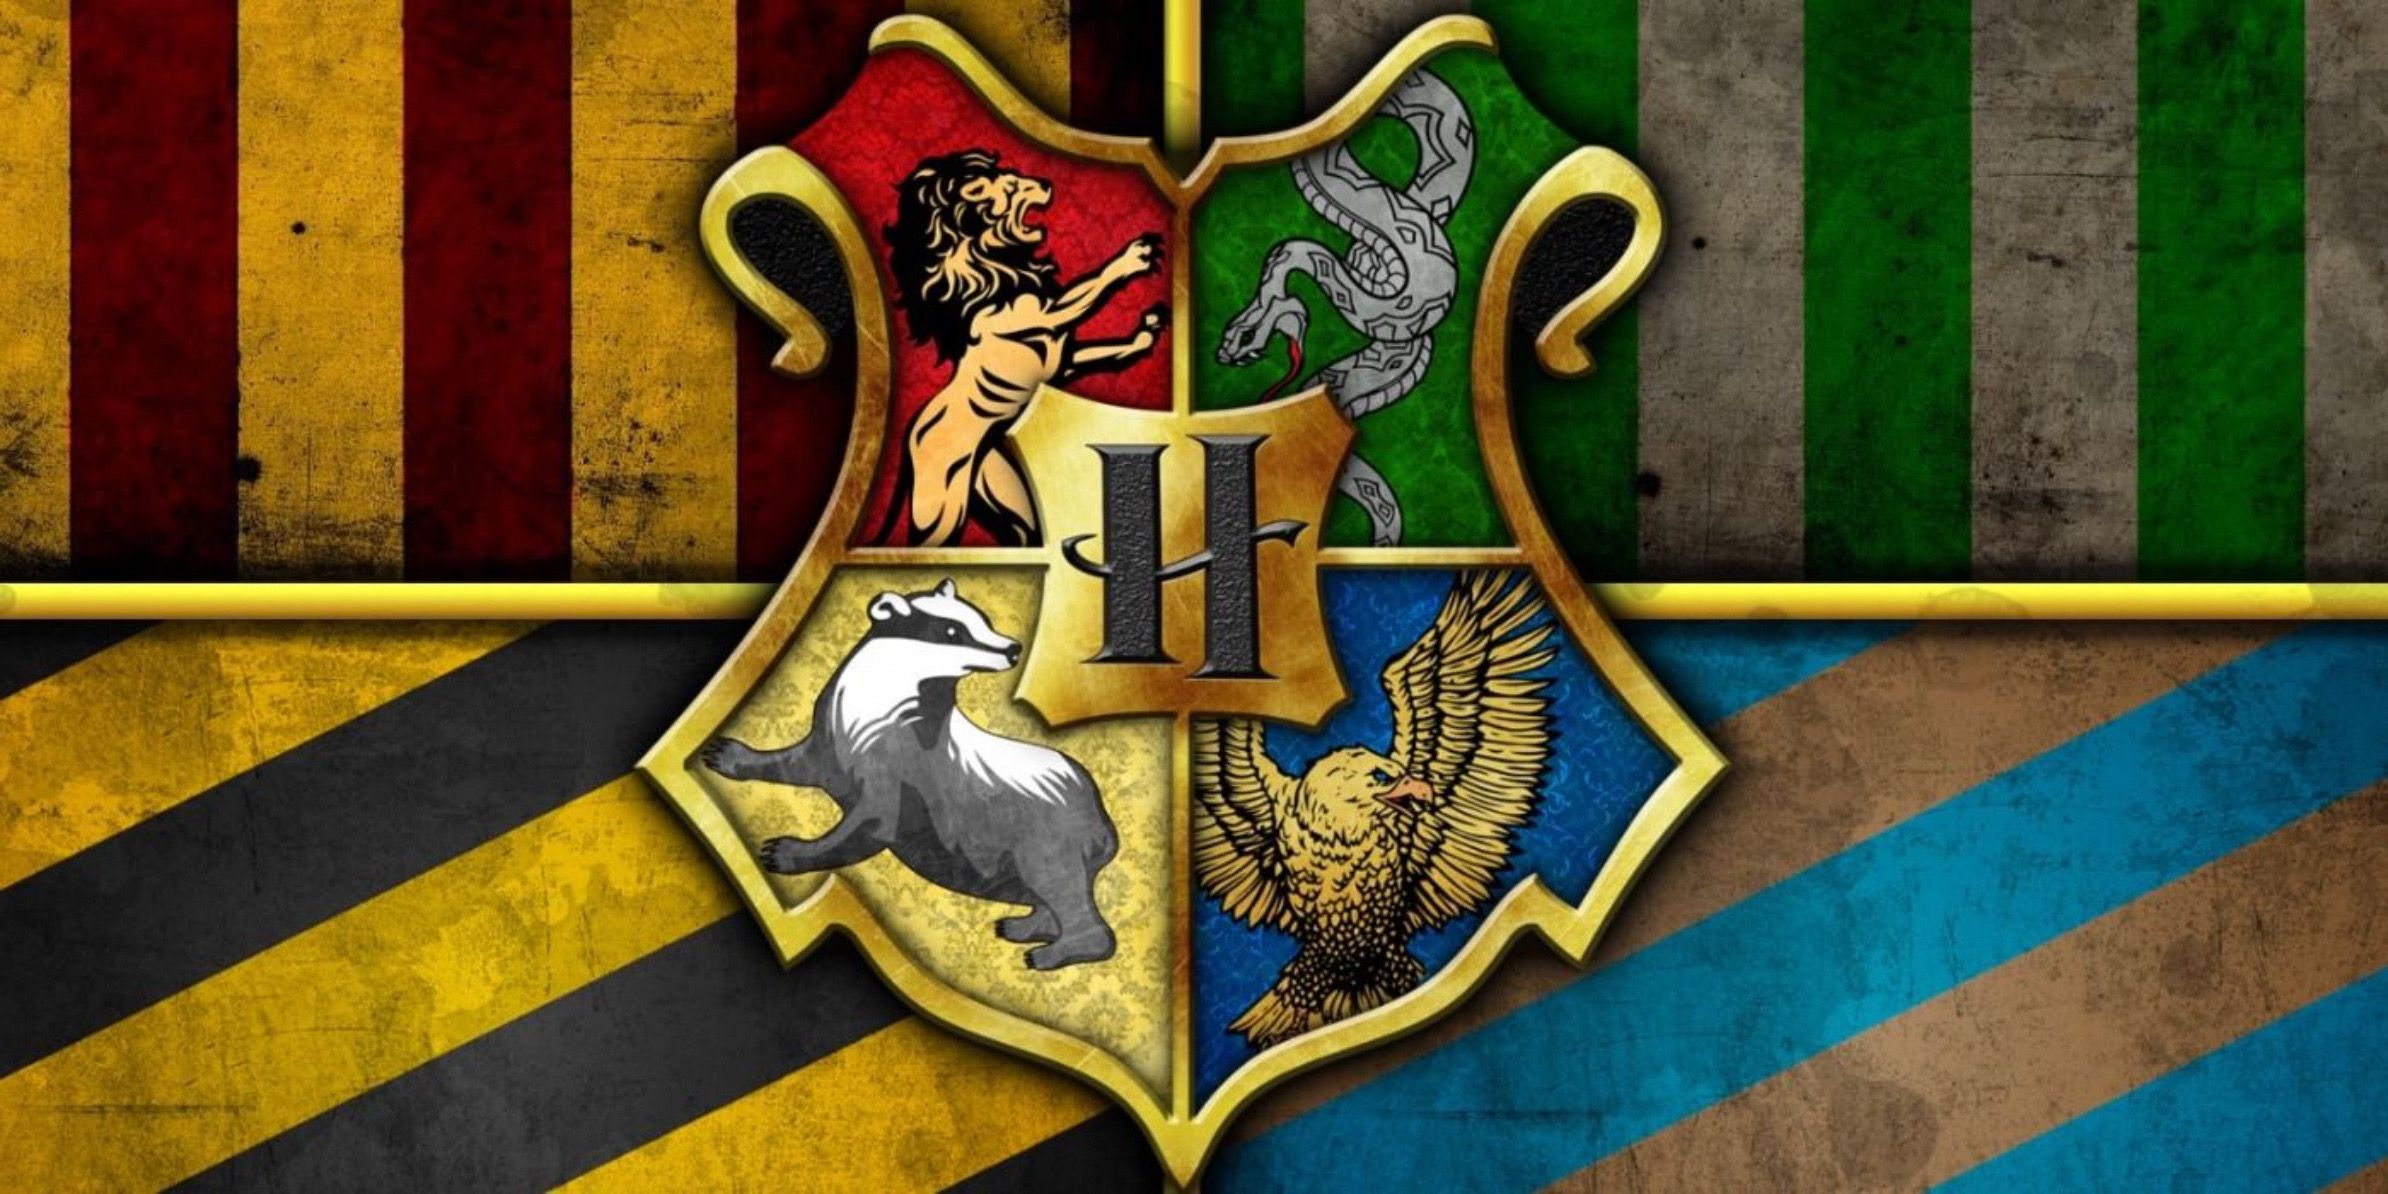 hogwarts houses - slytherin, ravenclaw, gryffindor, and hufflepuff